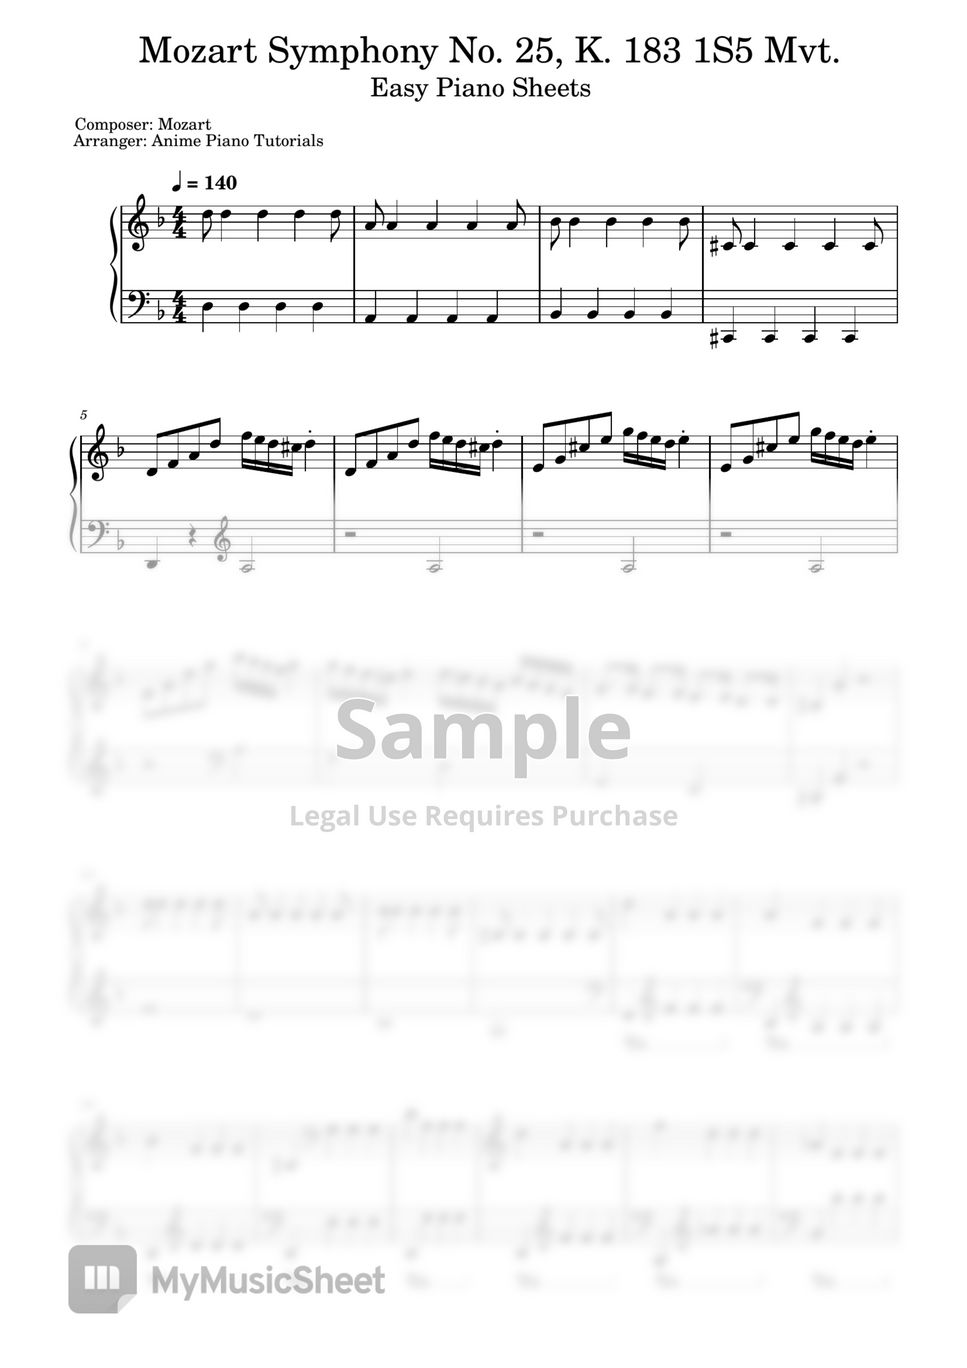 Mozart - Mozart Symphony No. 25, K 183 1S5 Mov (EASY) by Anime Piano Tutorials